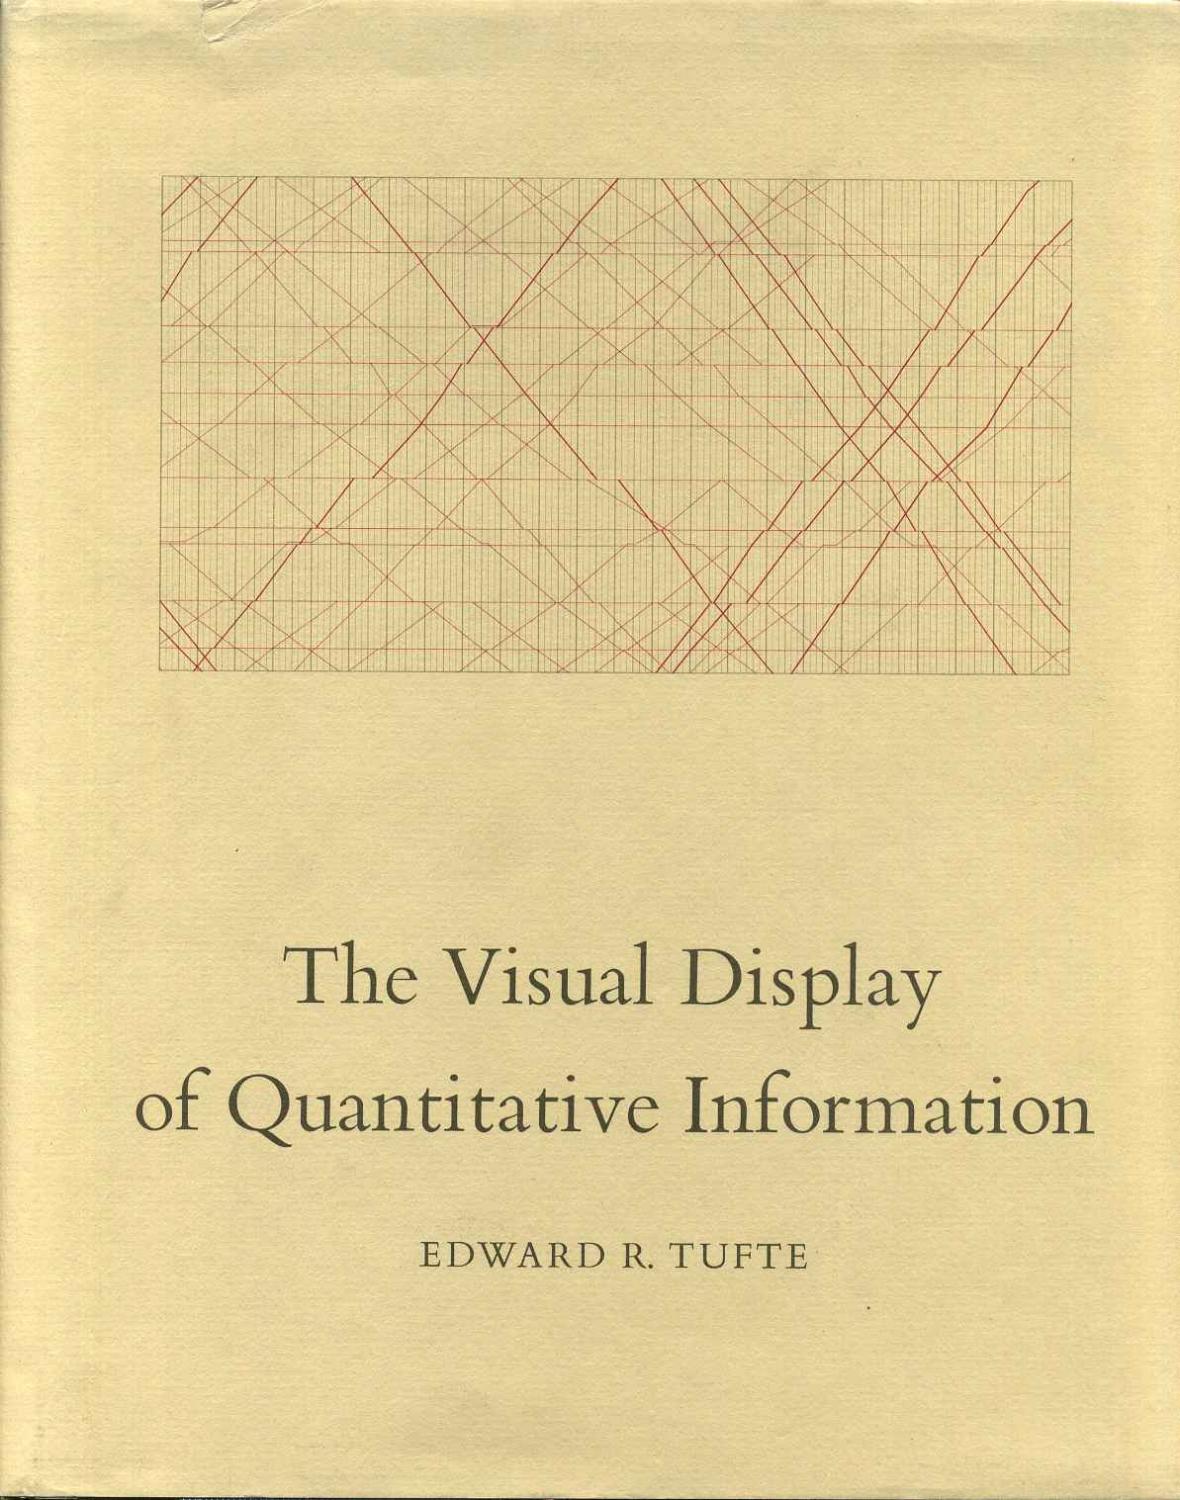 edward r tufte the visual display of quantitative information